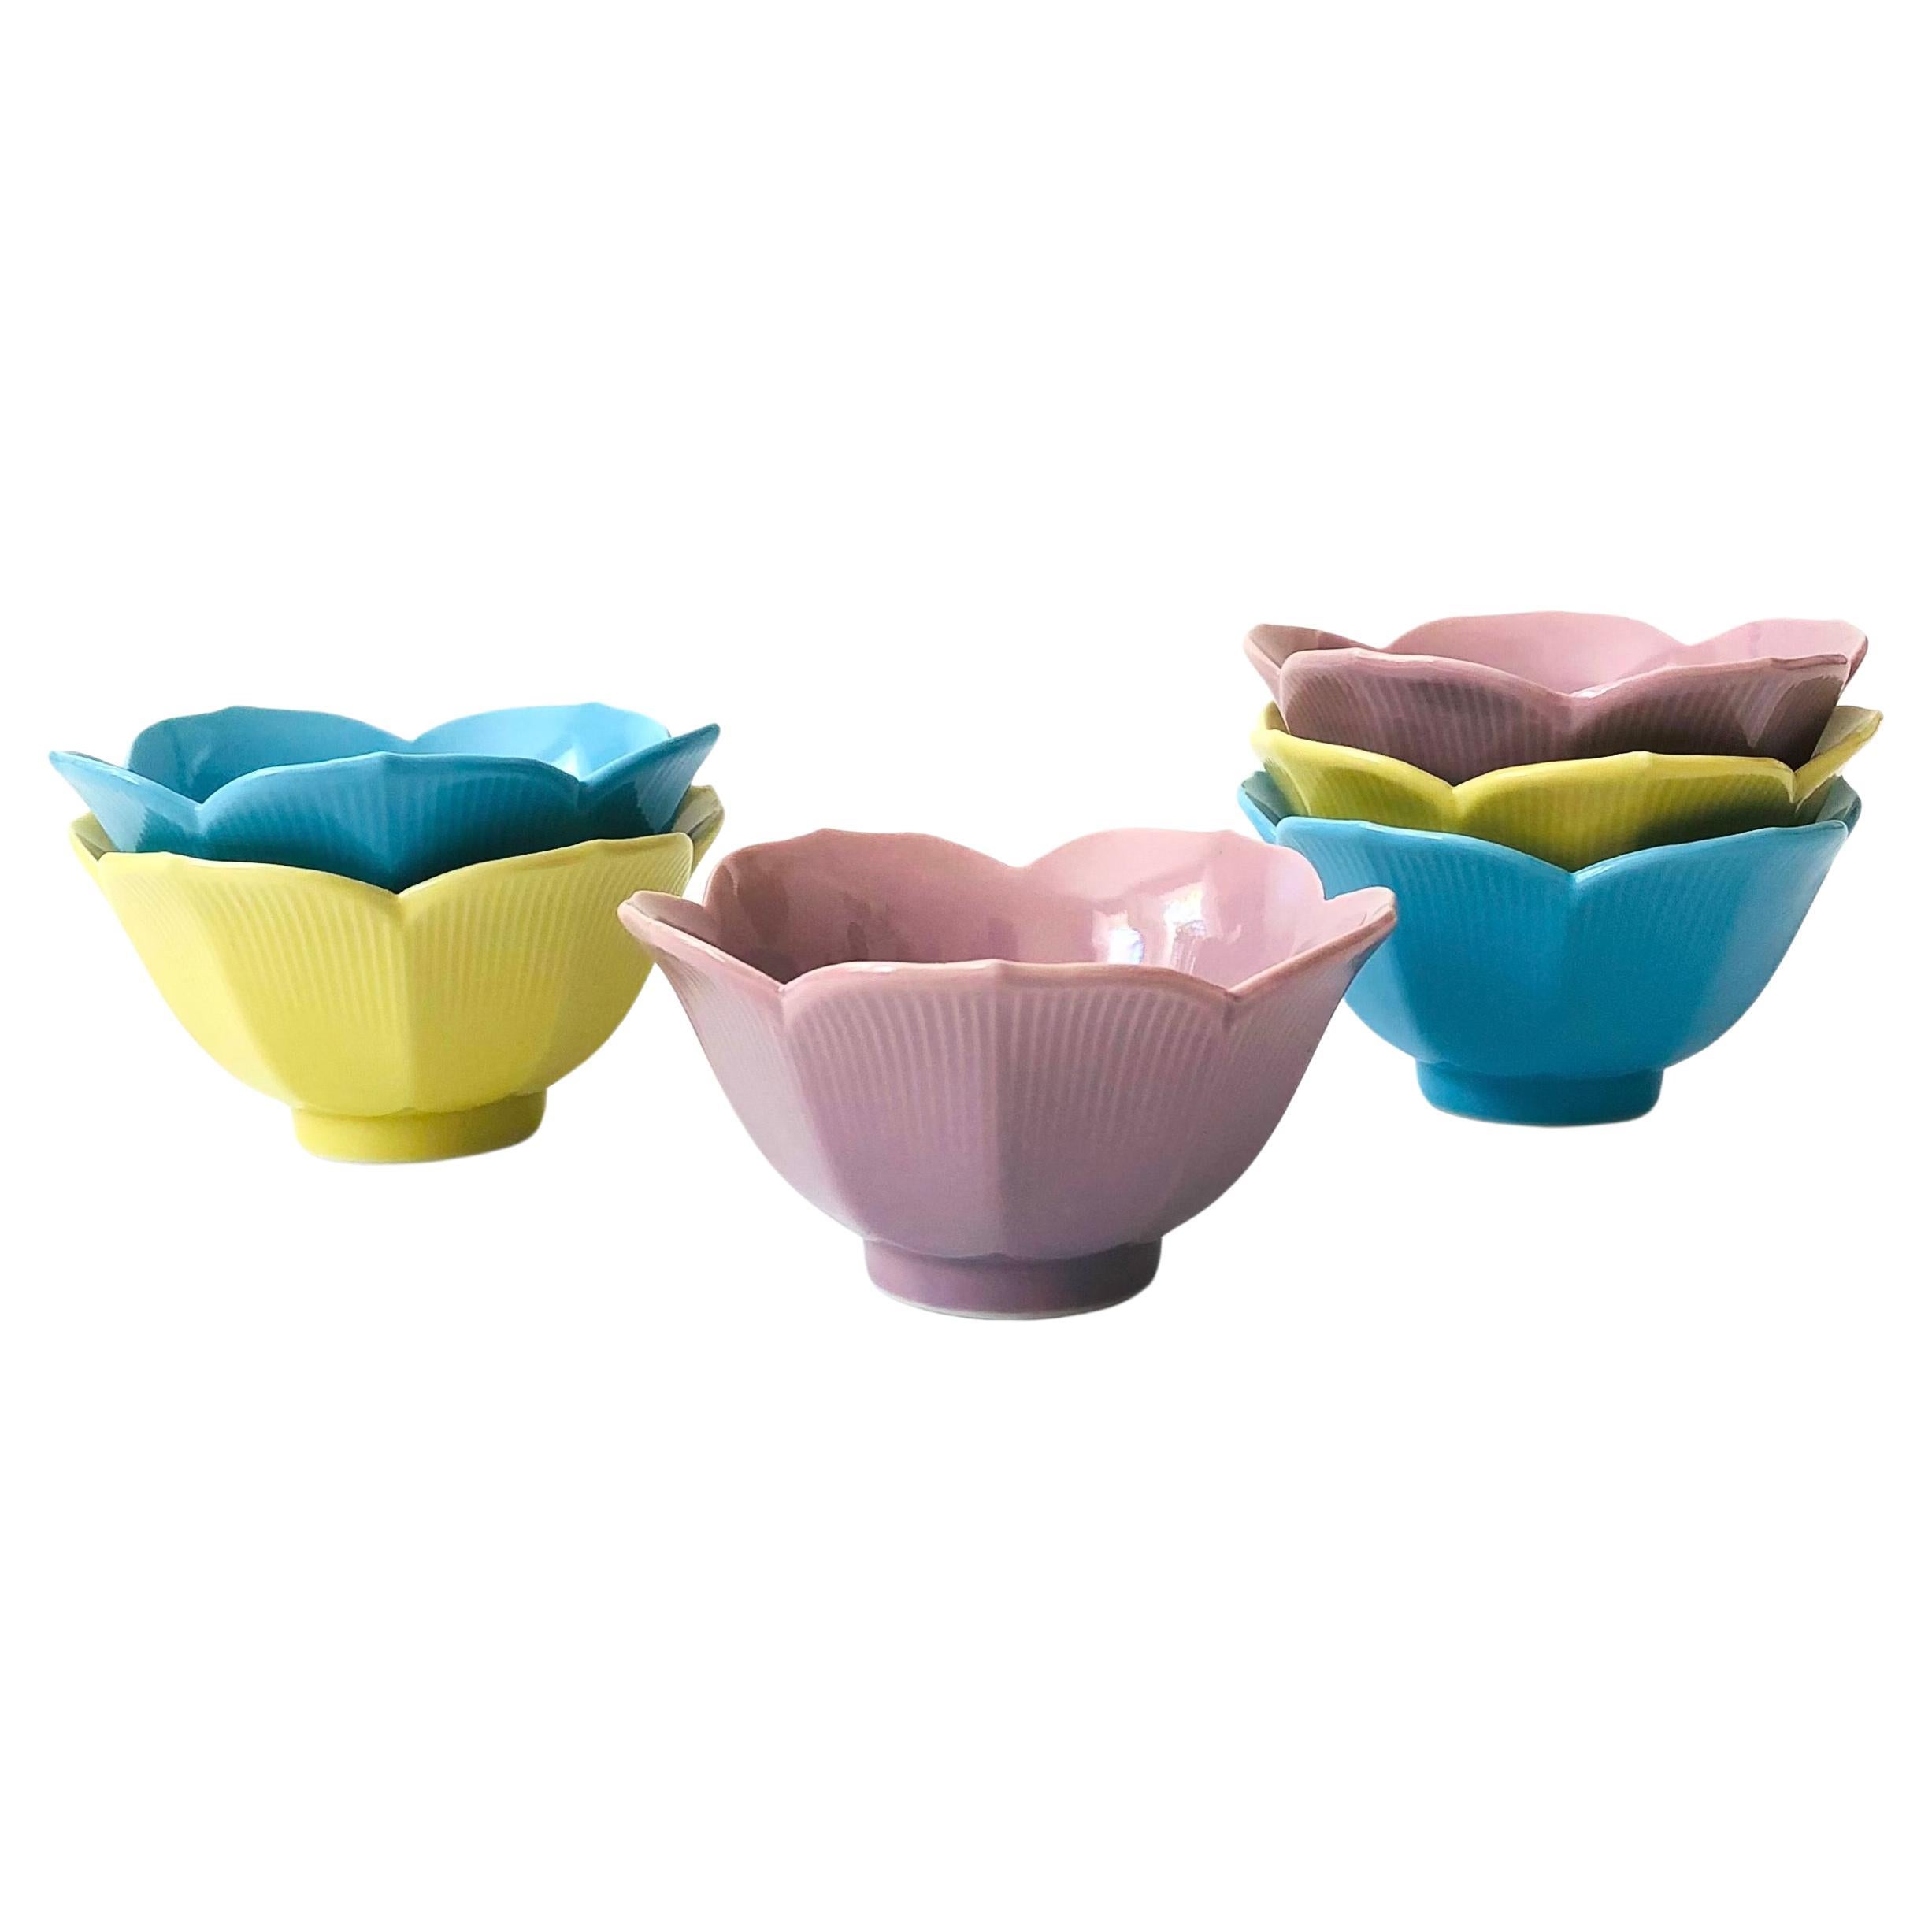 Colorful Lotus Bowls - Set of 6